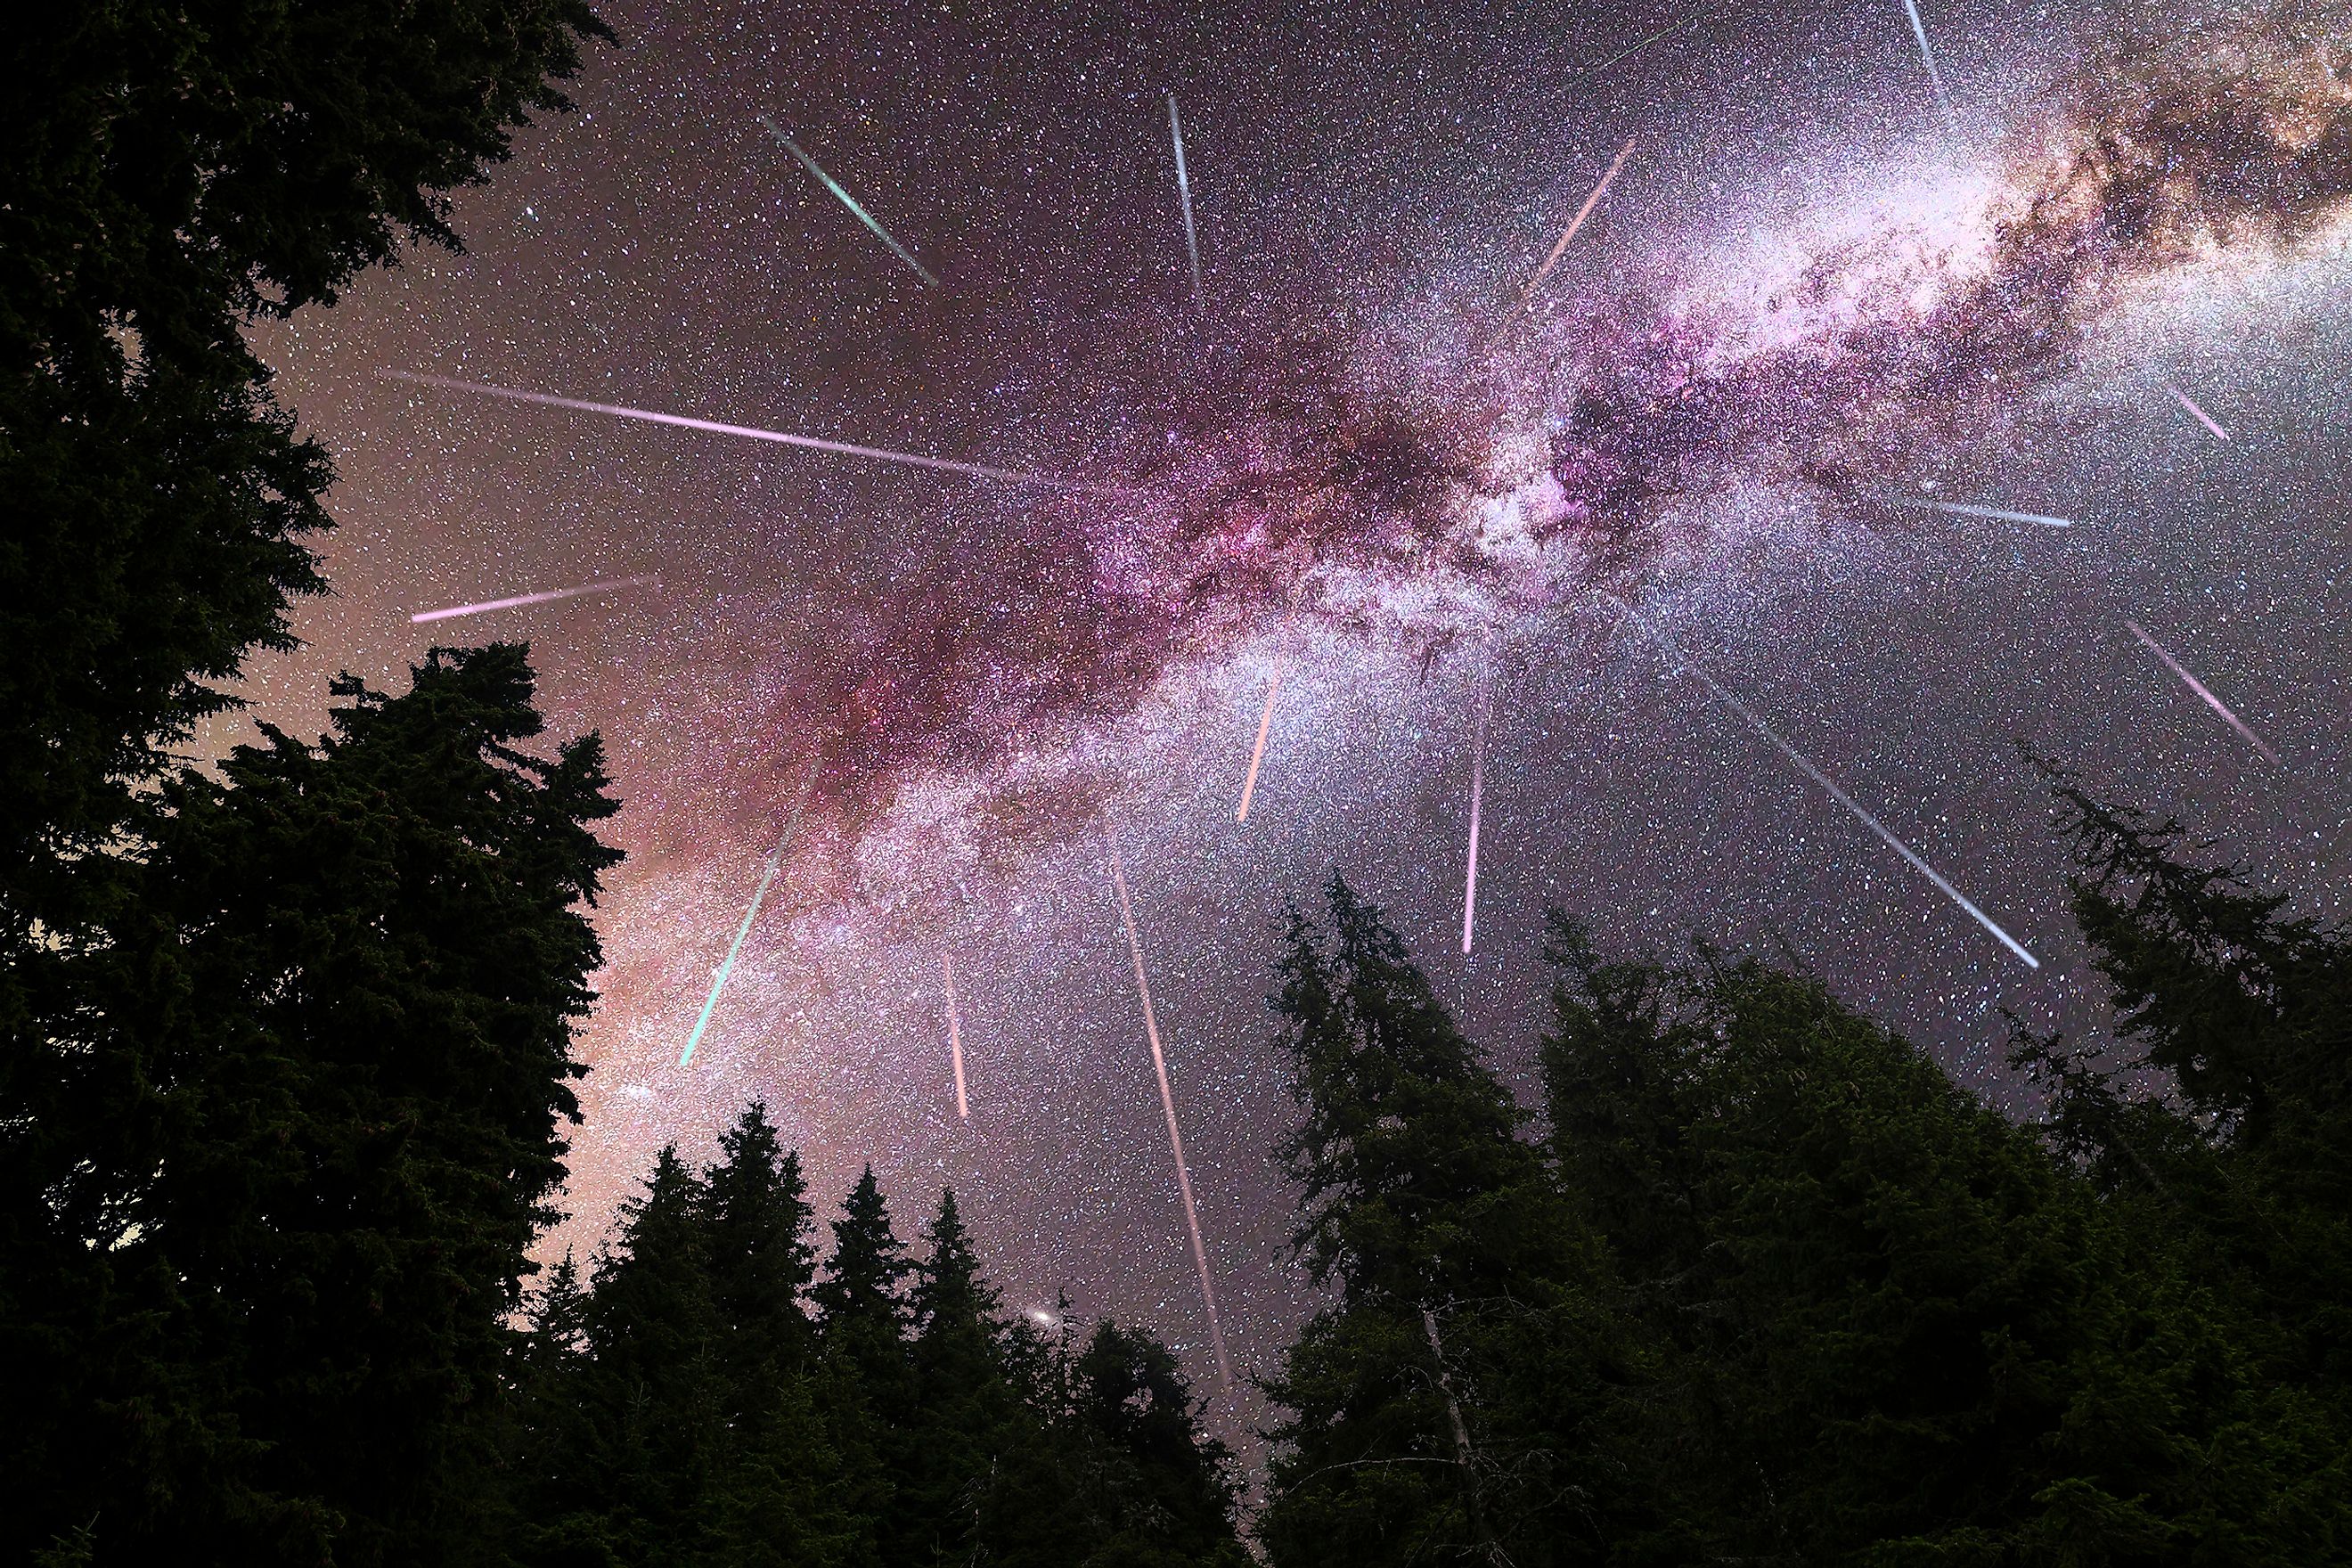 Meteors Passing Through the Night Sky